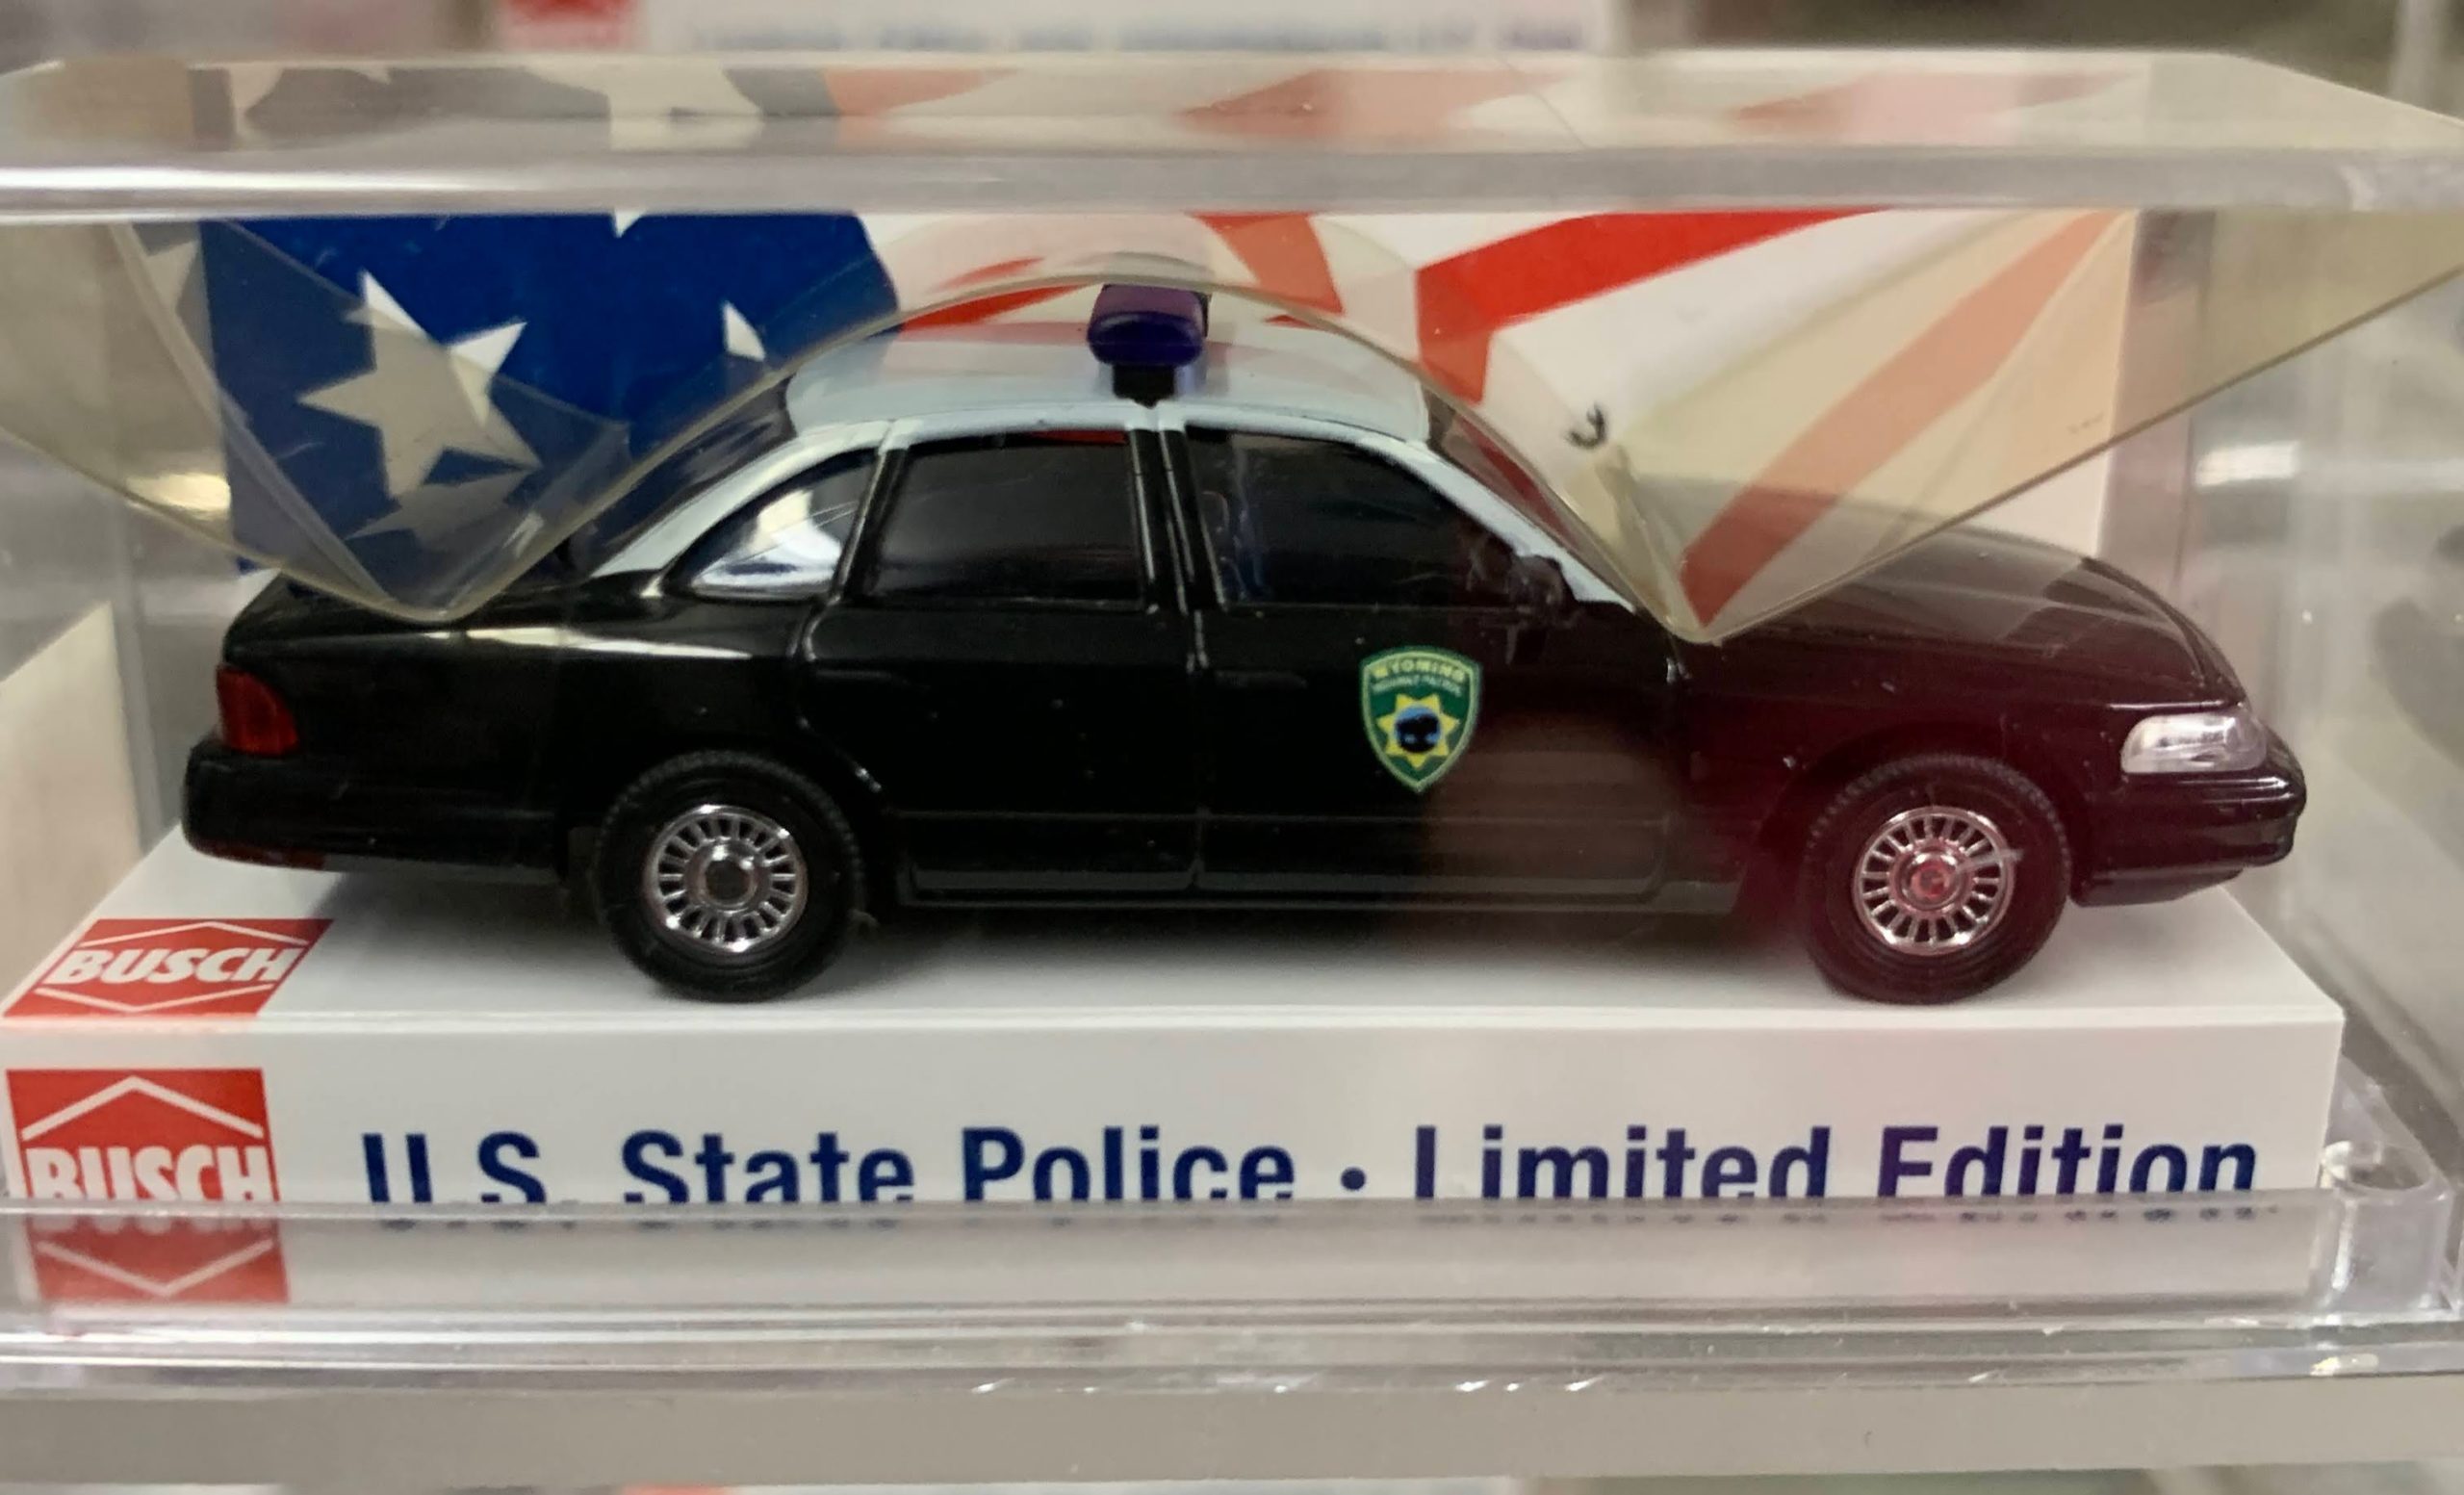 U.S. State Police Series - Wyoming